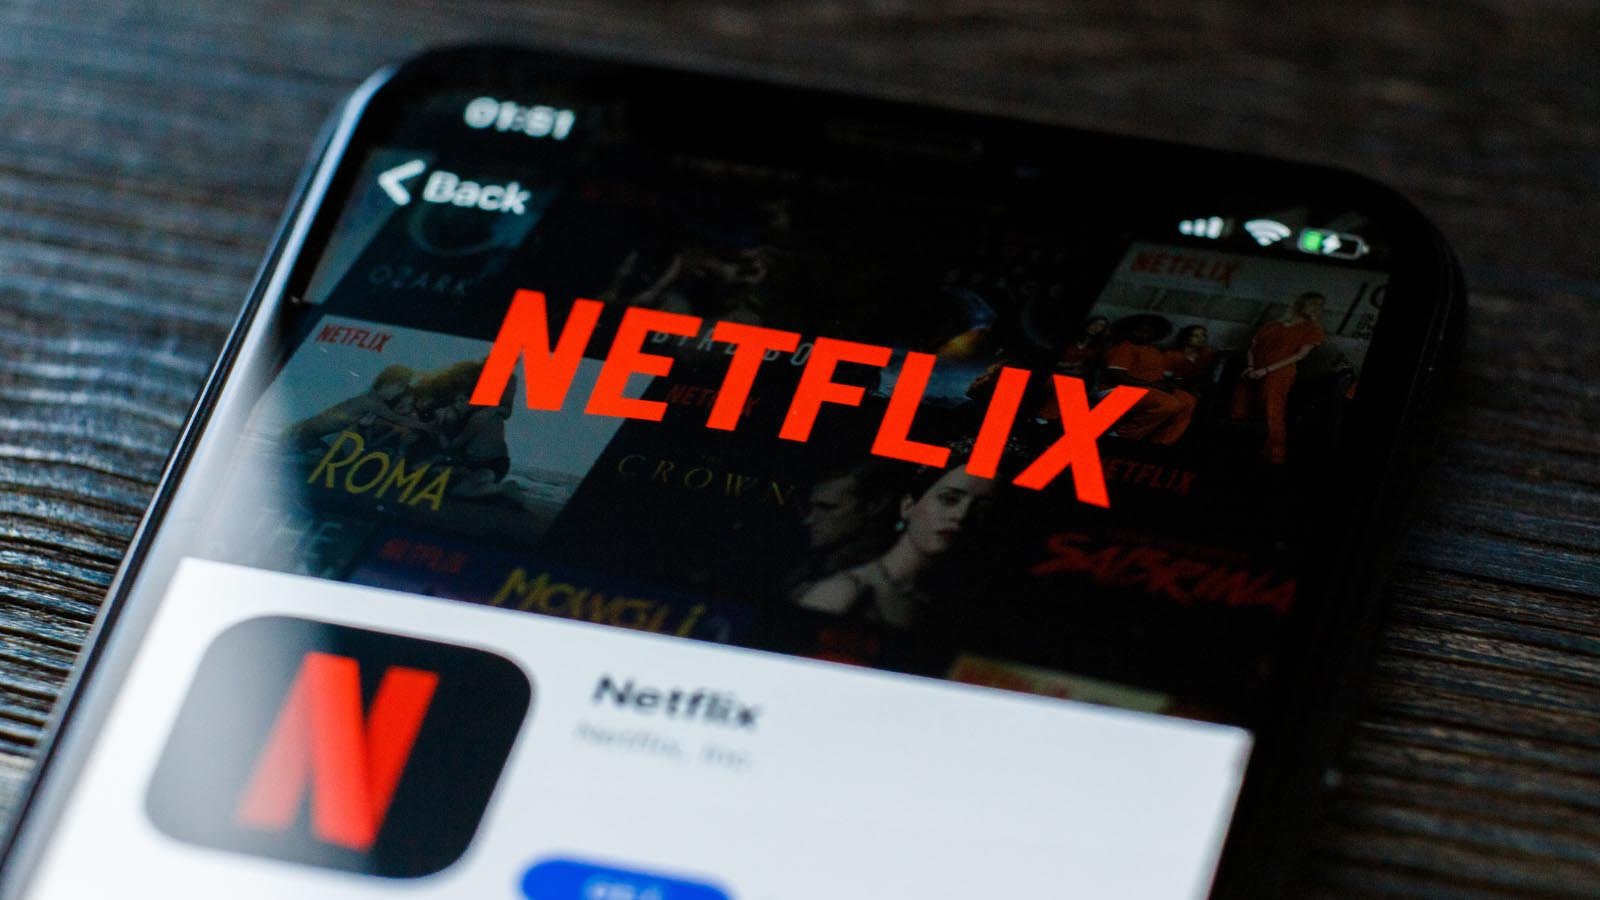 Netflix (NFLX Stock) app open on a phone screen